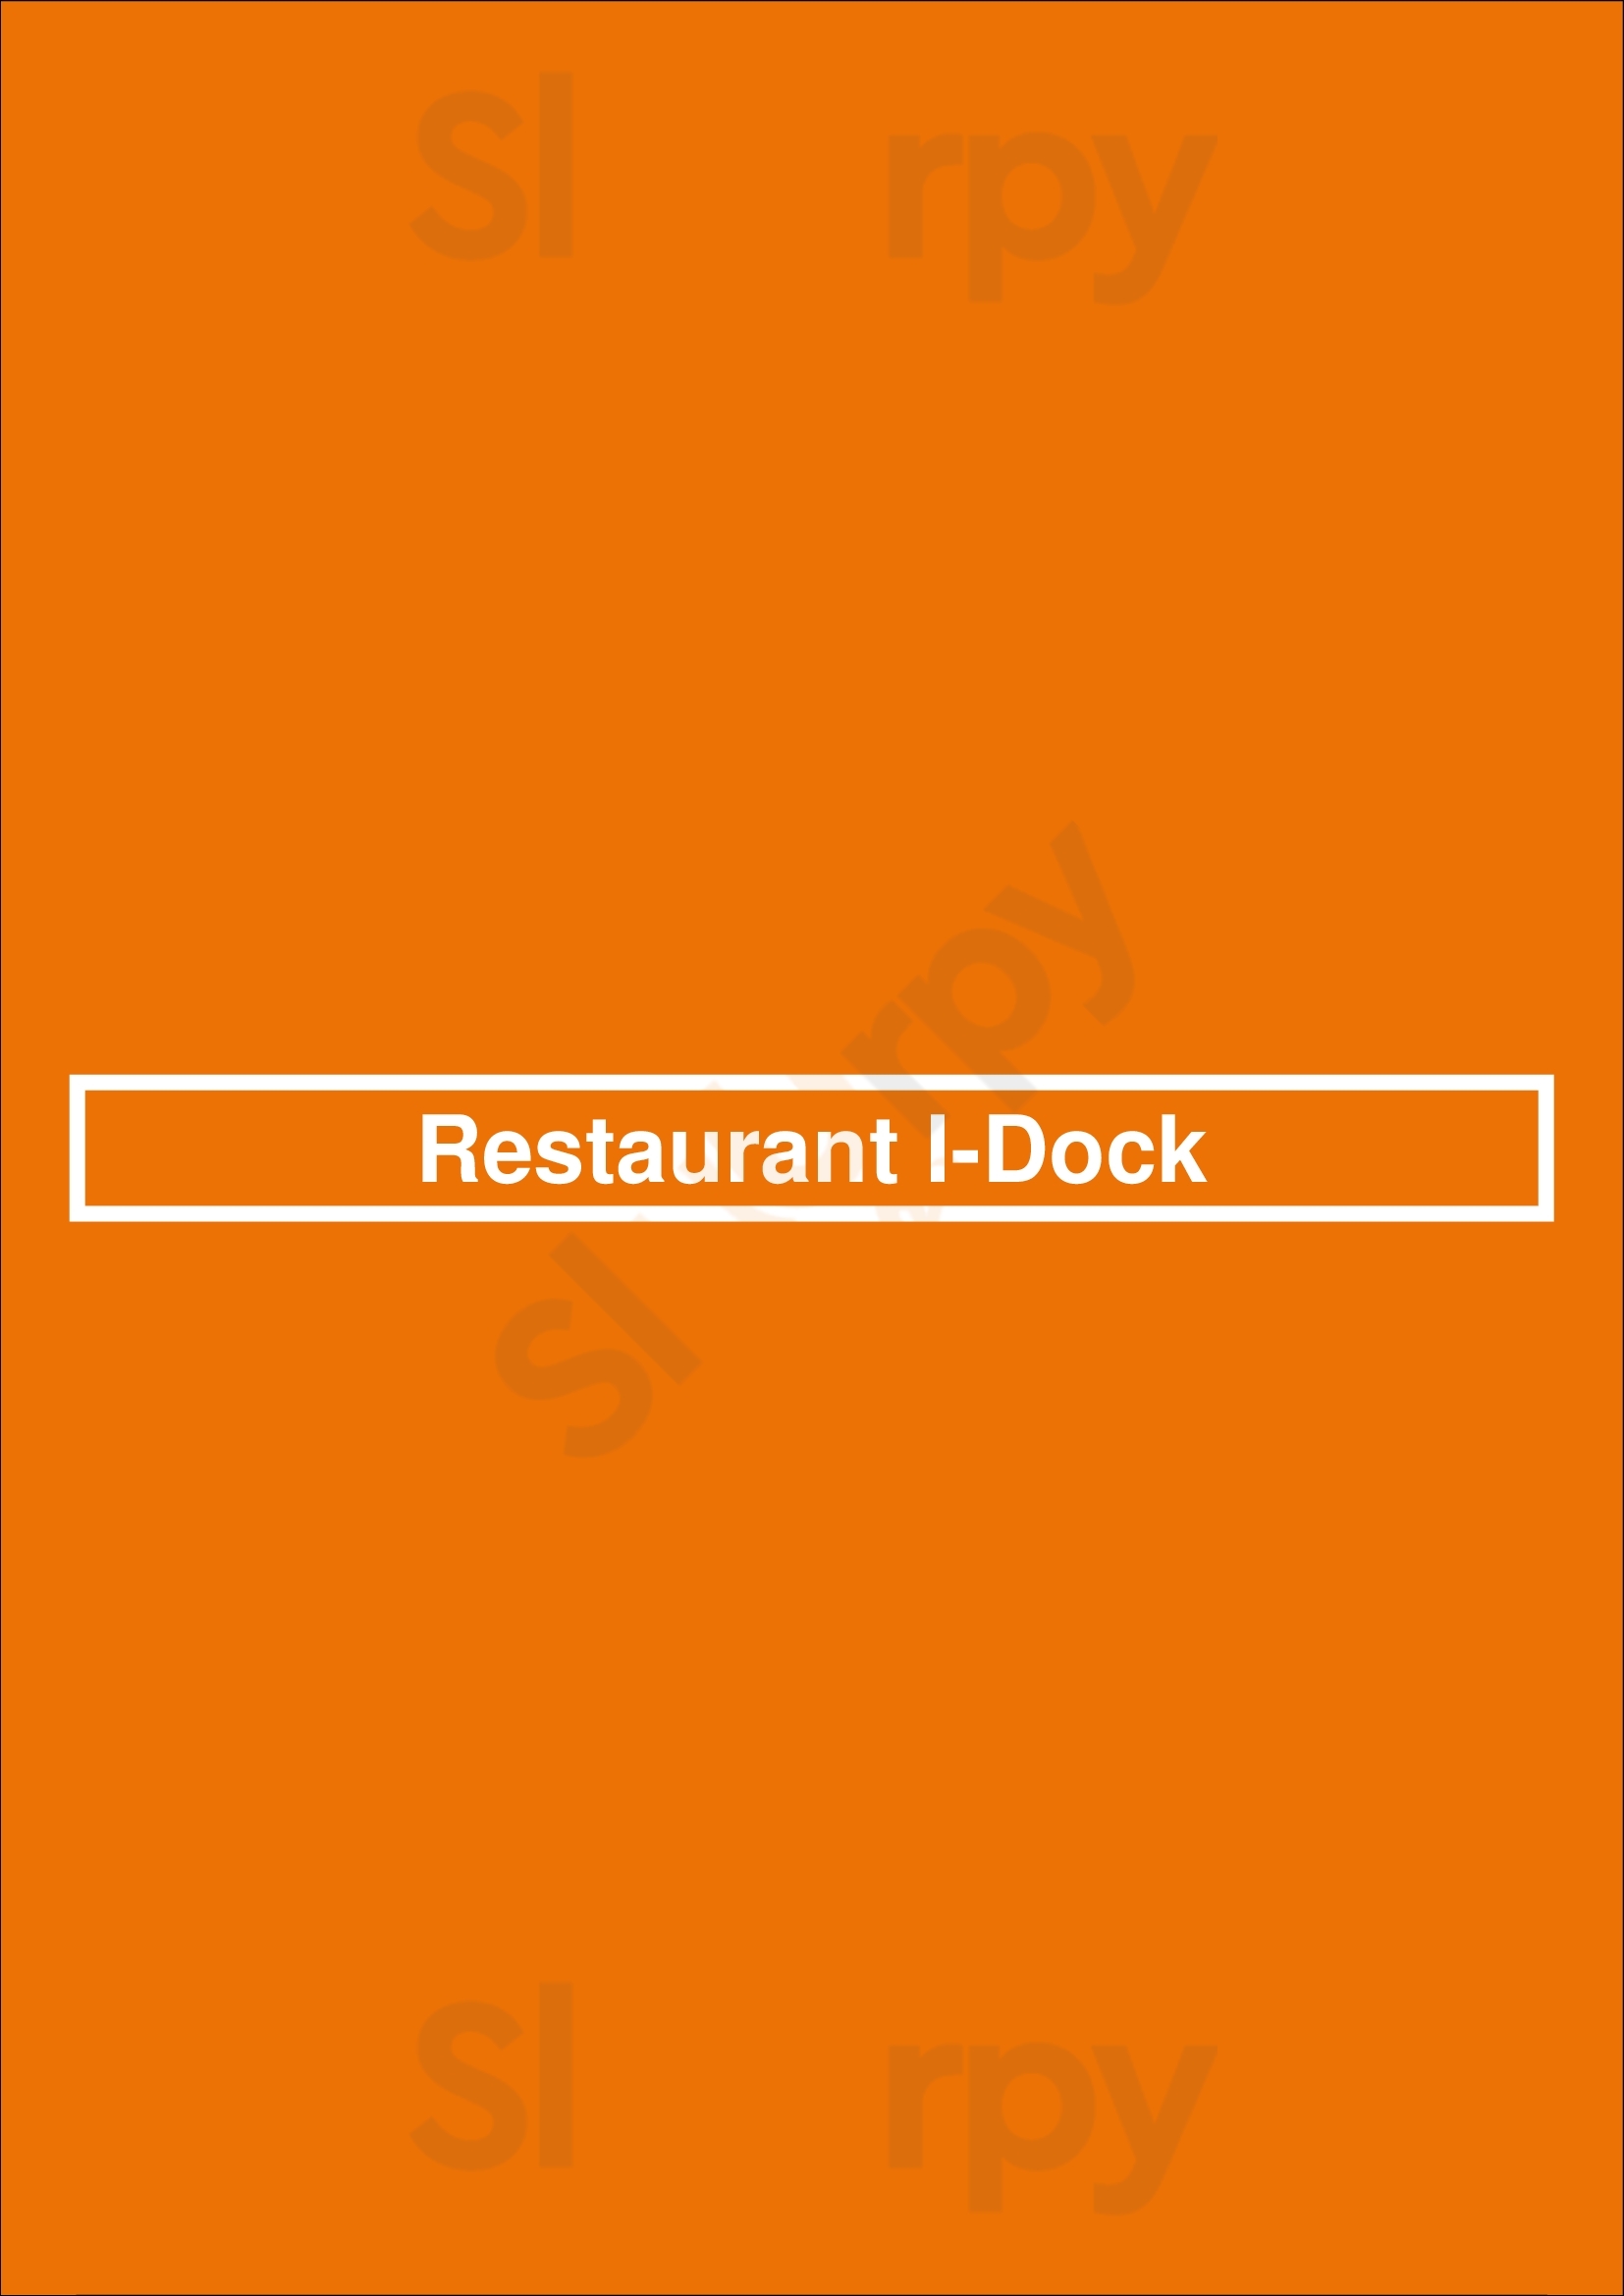 Restaurant I-dock Amsterdam Menu - 1